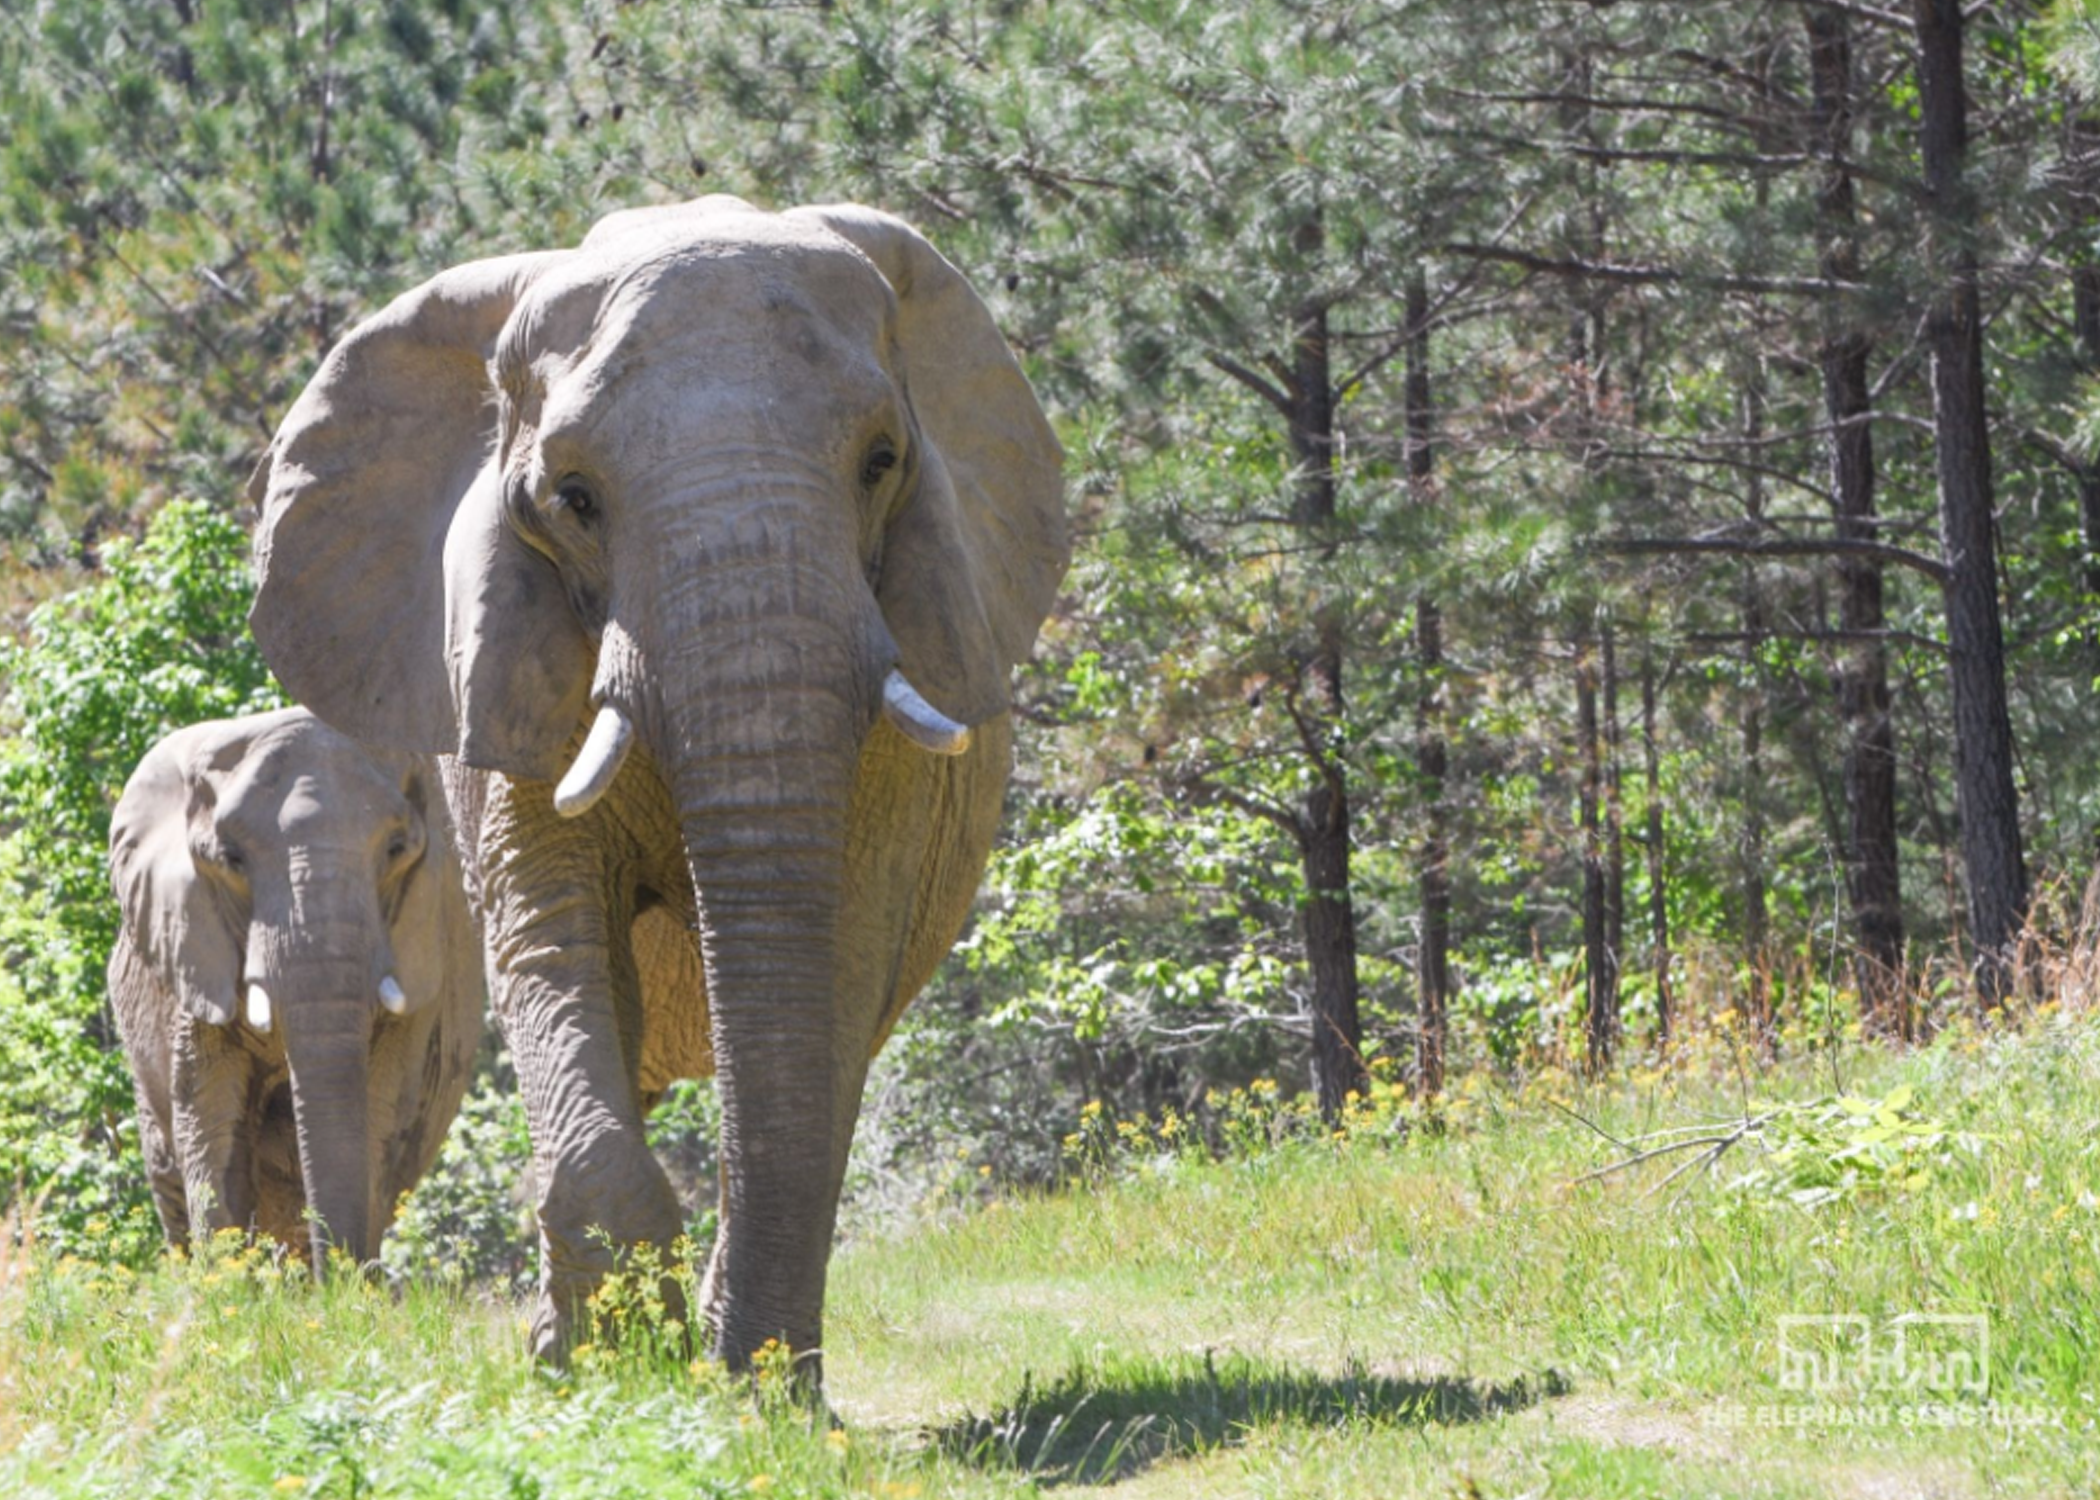 2 elephants walking through forest